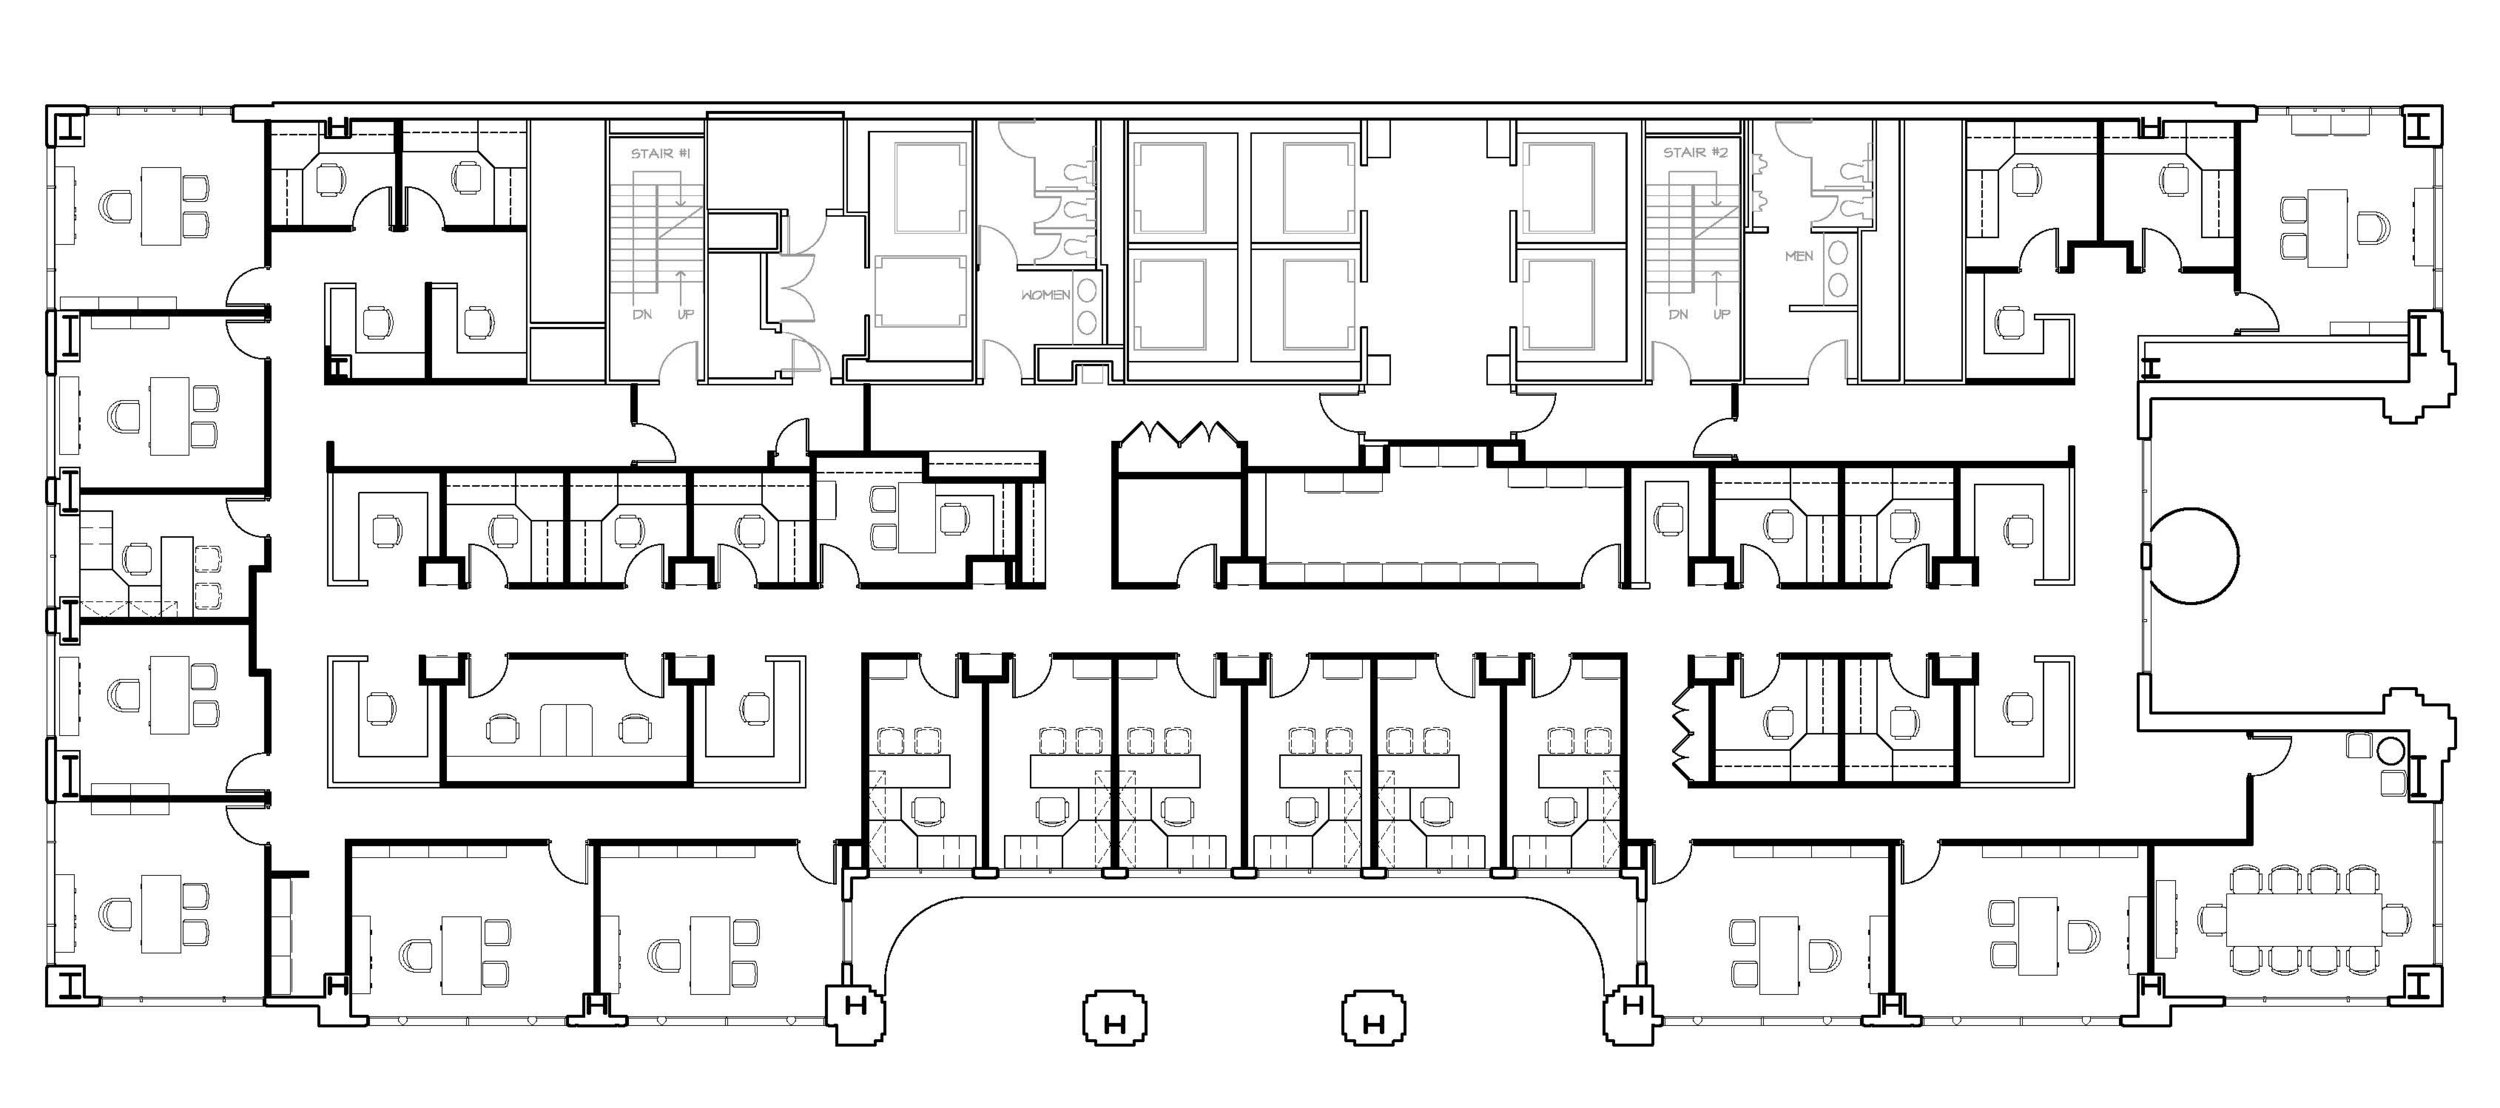 Litchfield Cavo 01.01 - Second Floor Plan.jpg